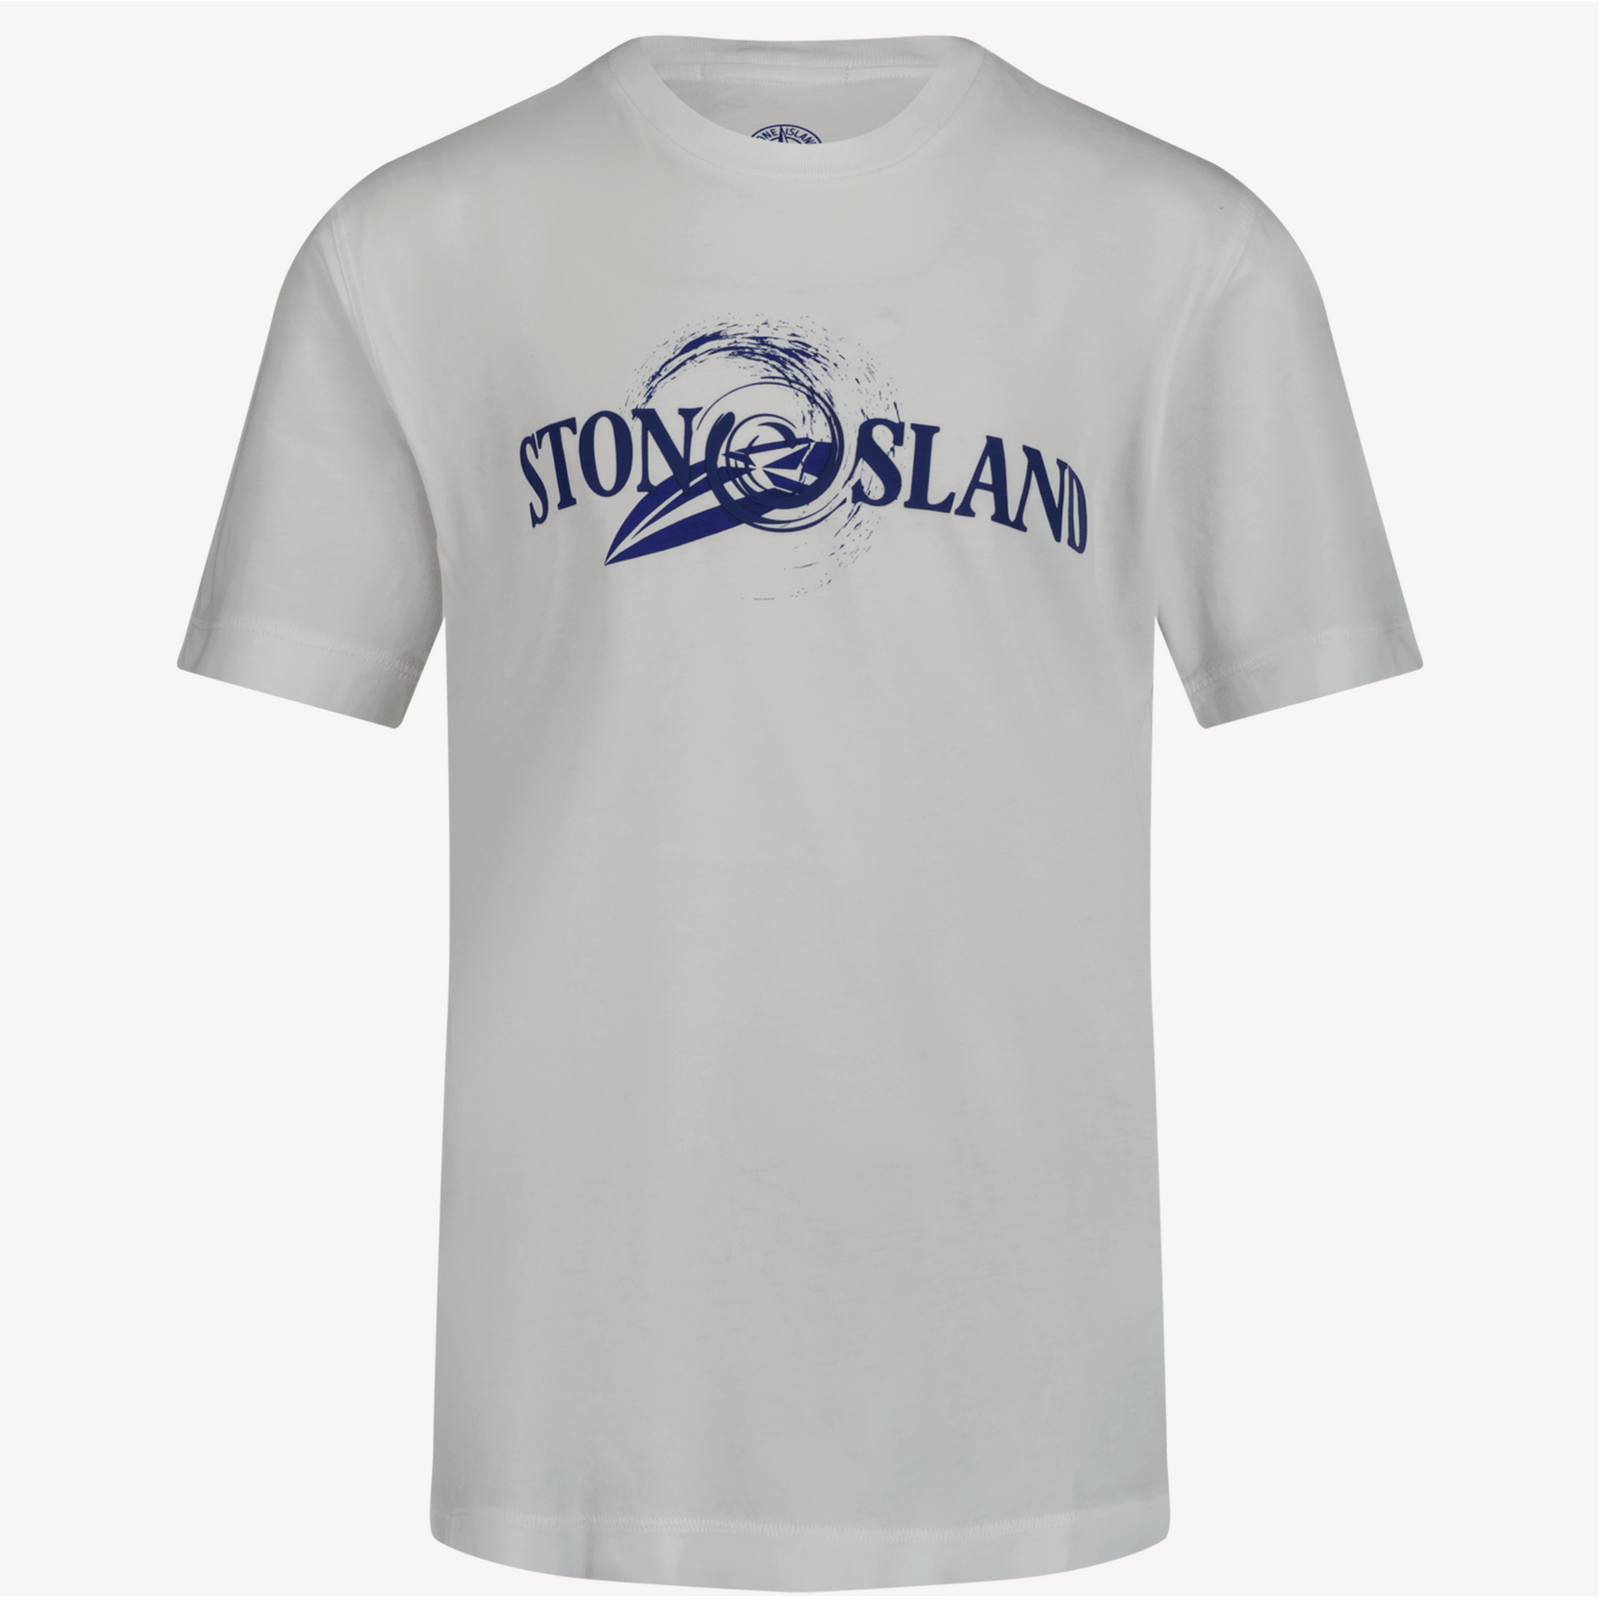 Stone Island Kinder Jongens T-Shirt Wit 2Y